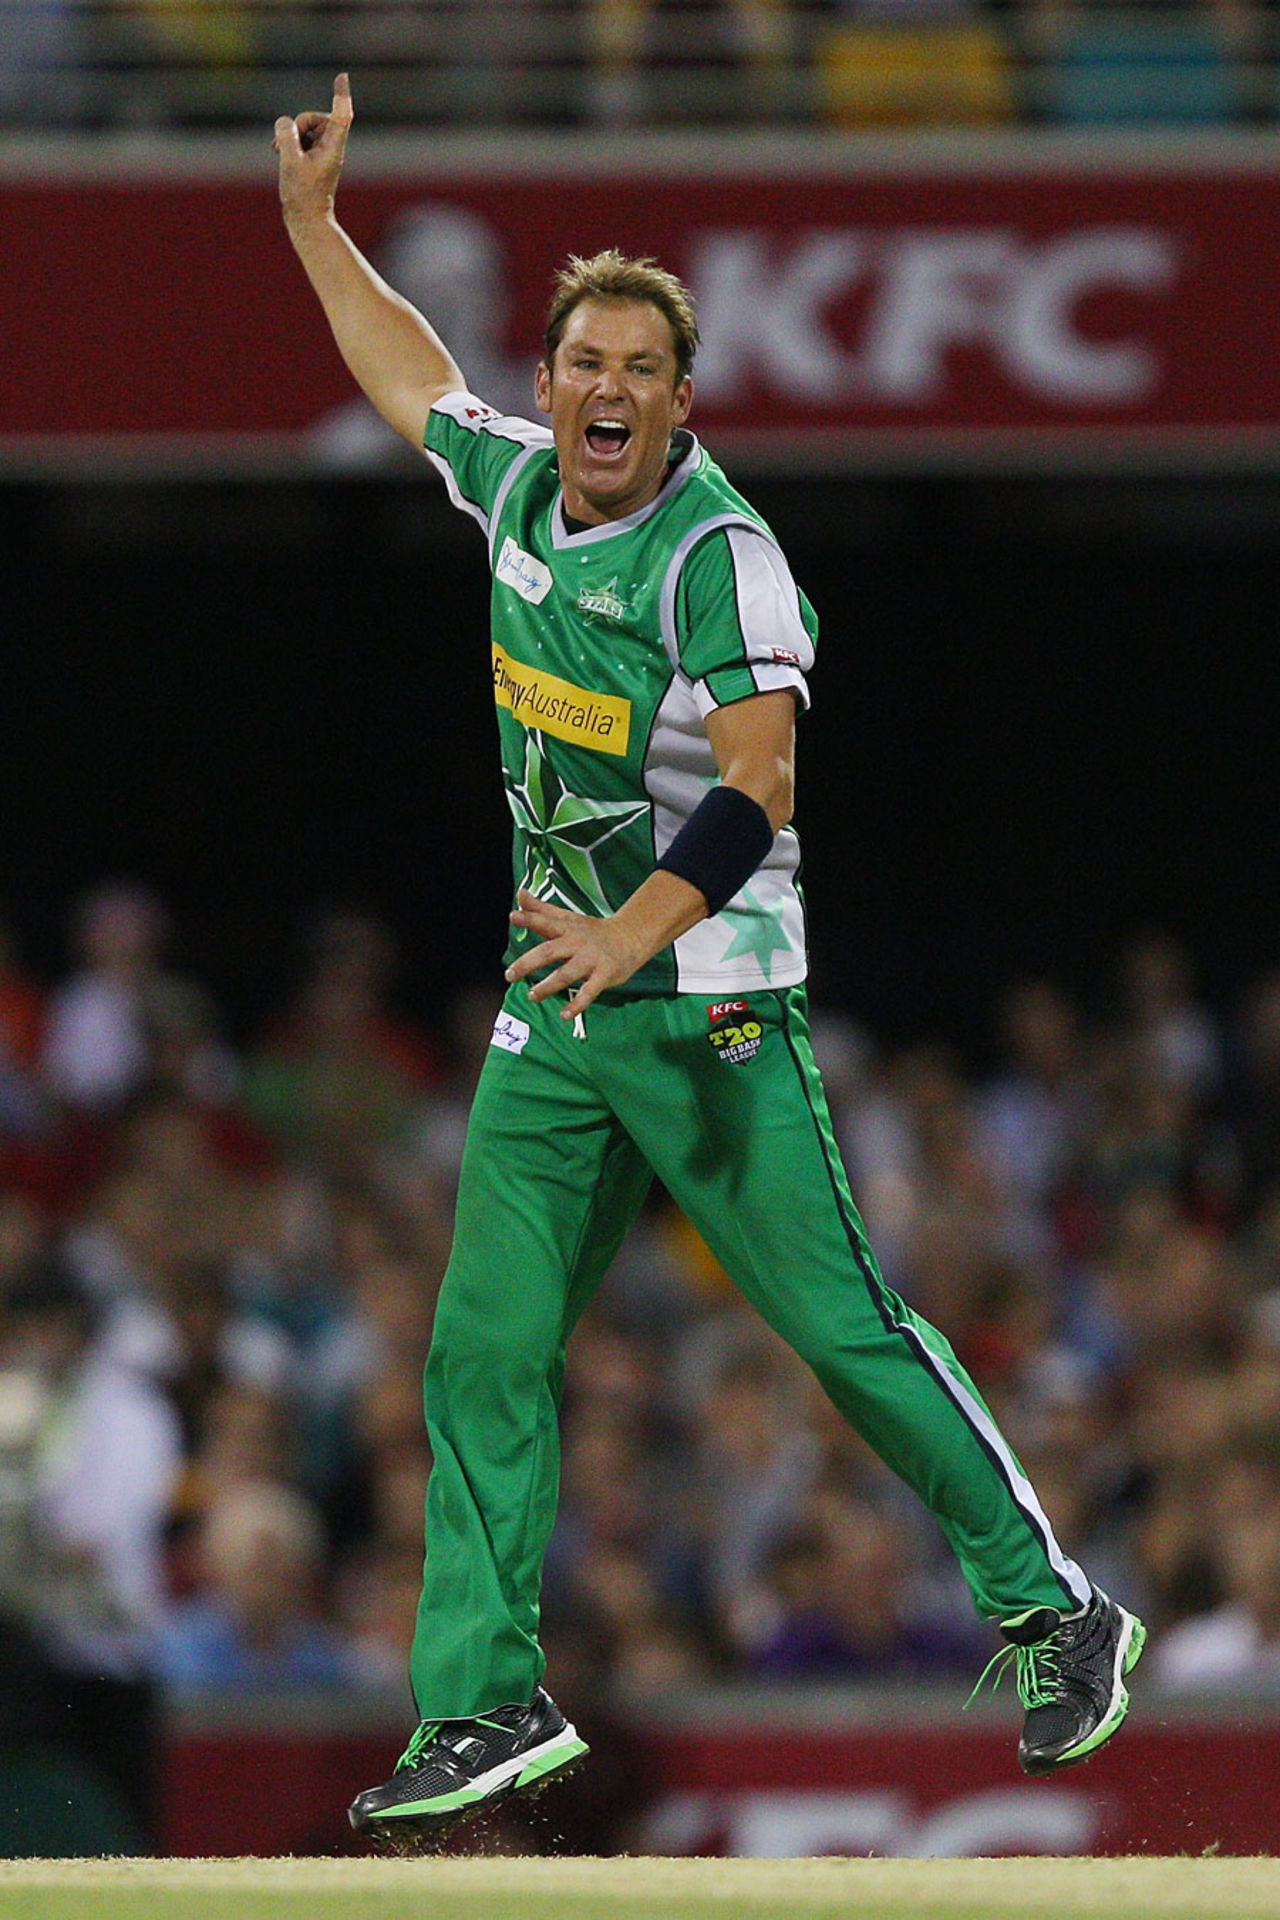 Shane Warne celebrates a wicket, Brisbane Heat v Melbourne Stars, BBL, Brisbane, December 20, 2011